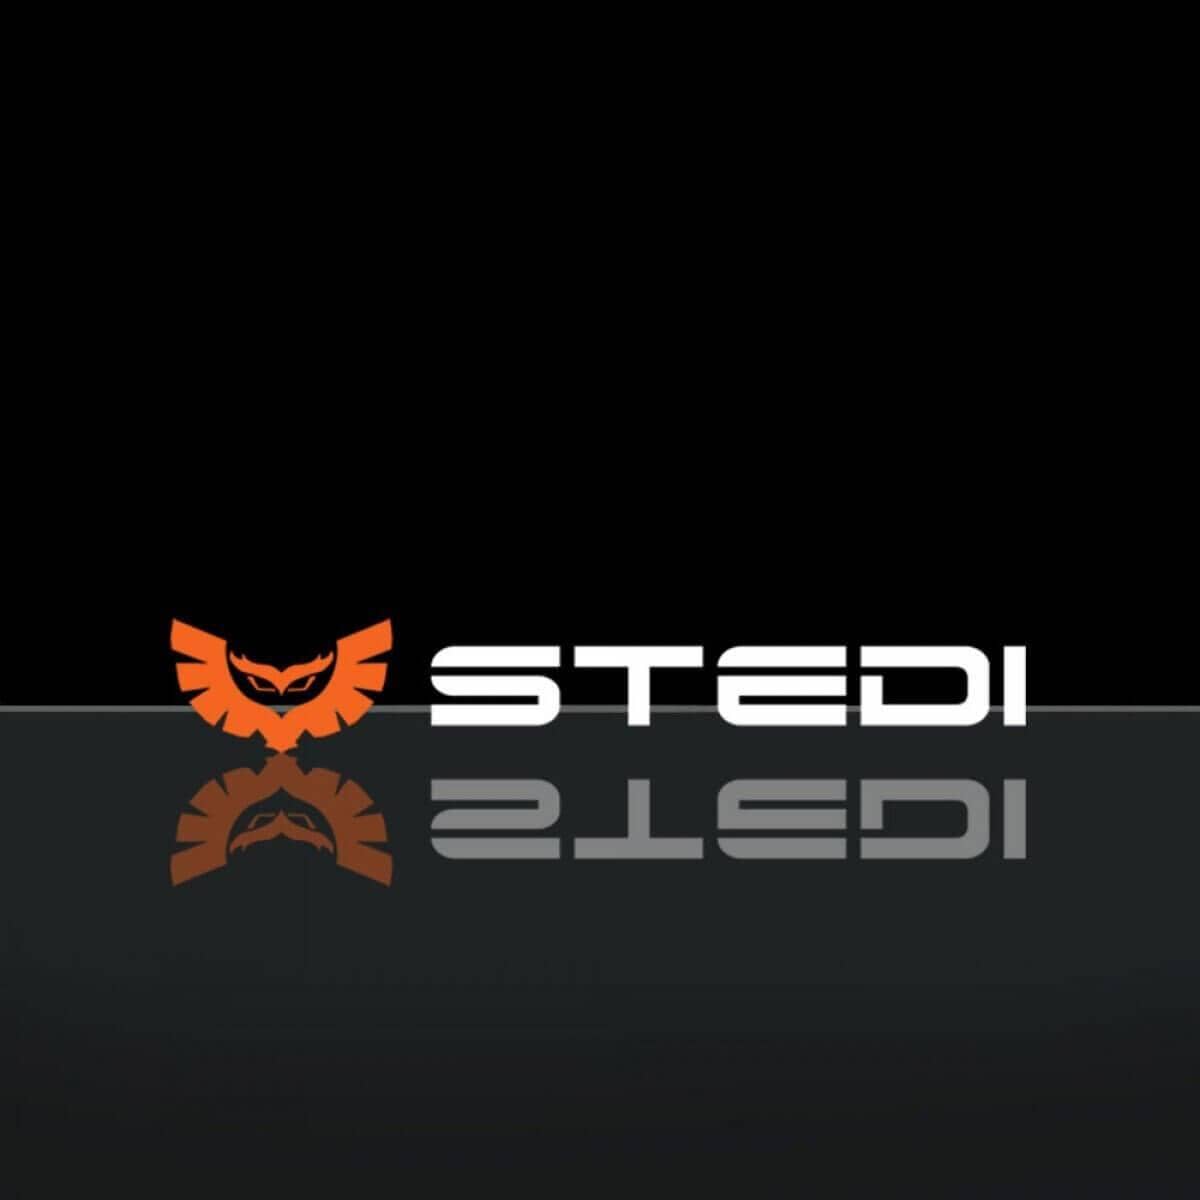 STEDI Banner Sticker 270mm x 40mm - NZ Offroader